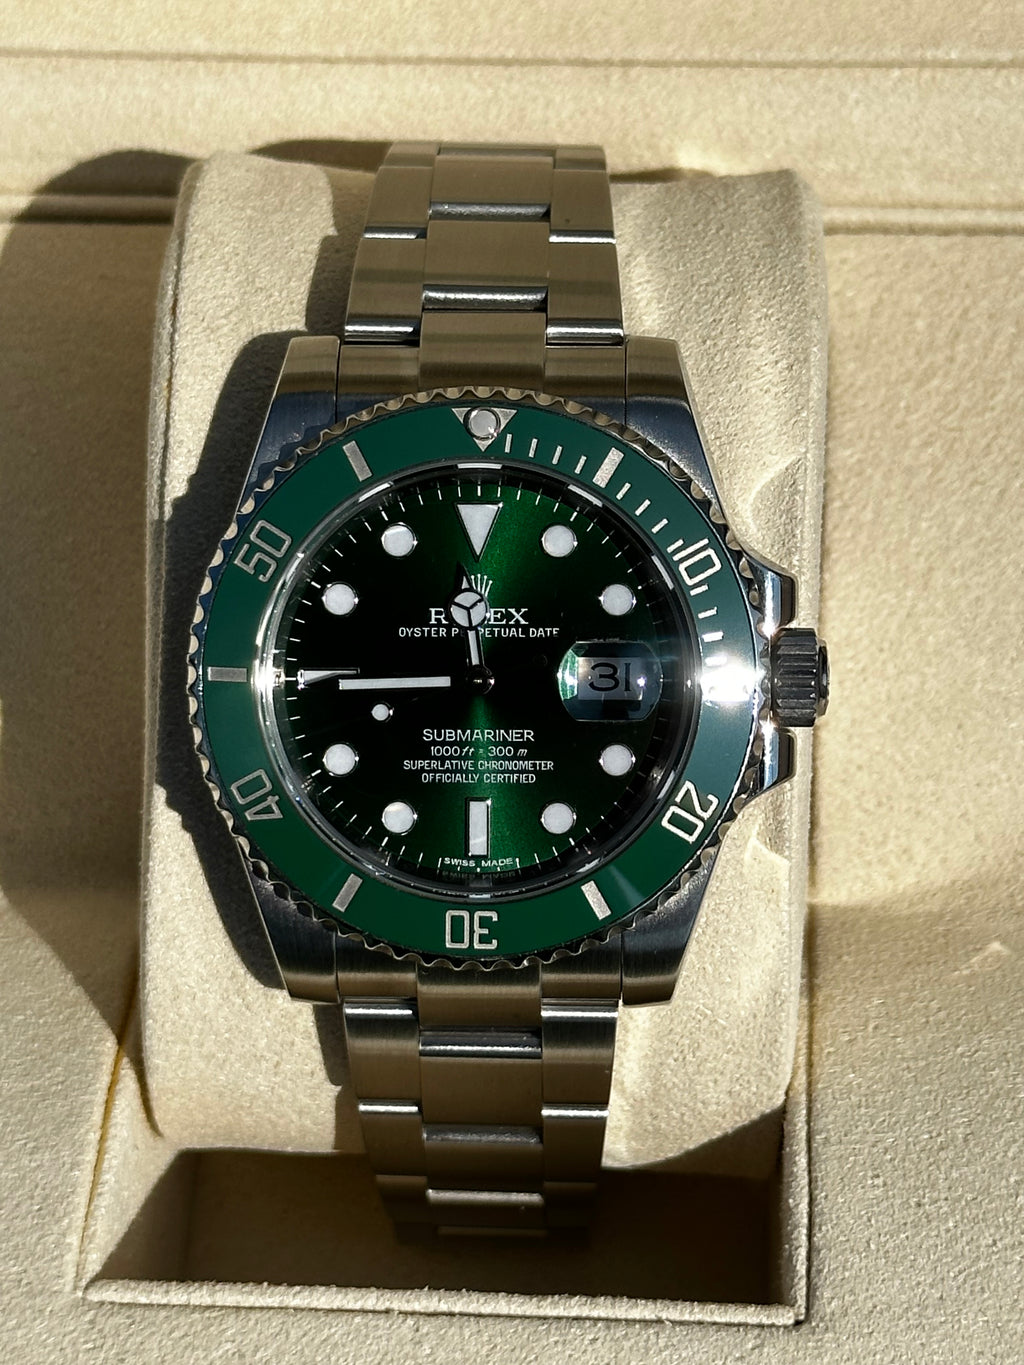 Rolex Submariner Date Hulk Ref. 116610LV - Green Dial & Green